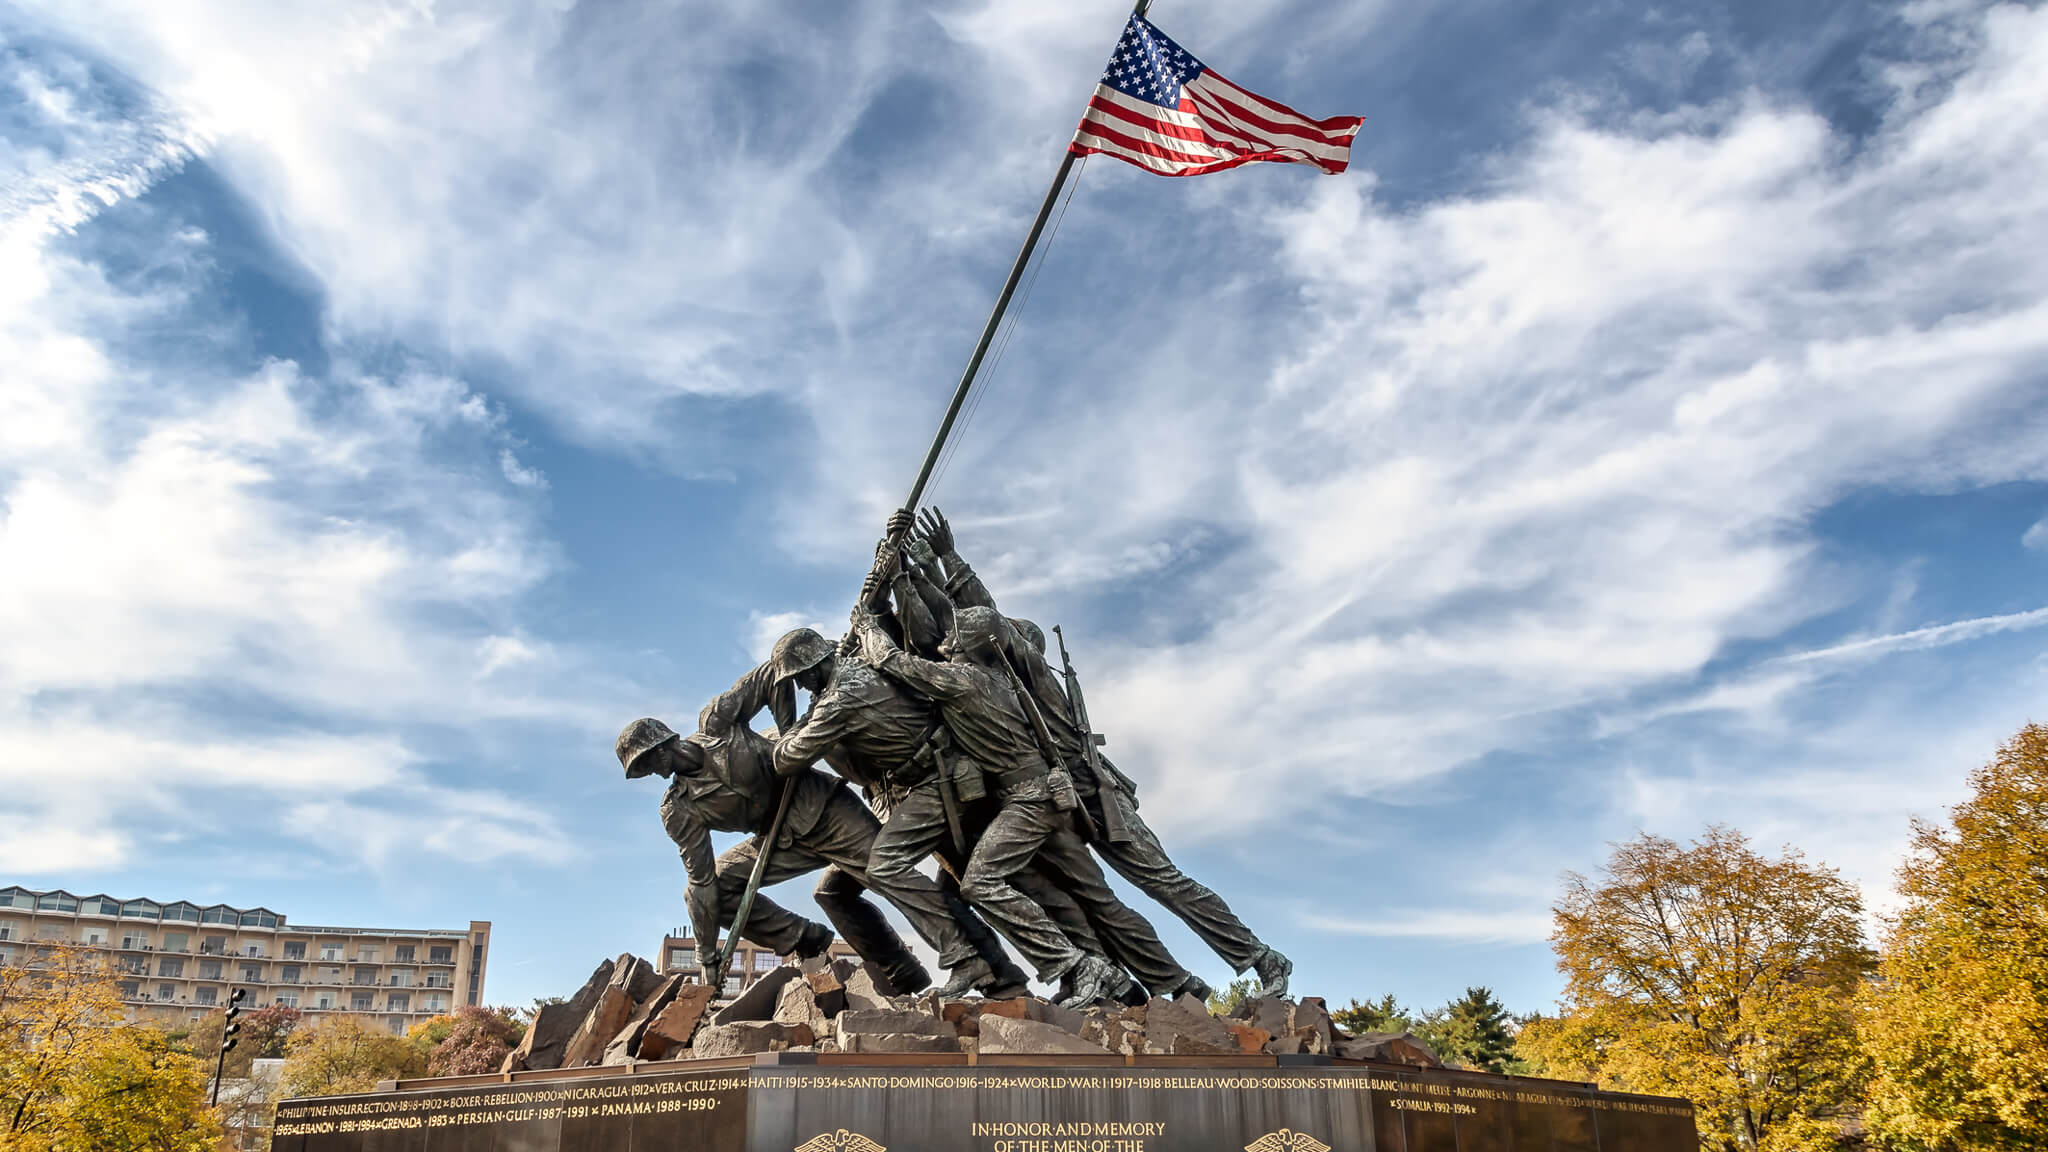 Veterans raising the flag, Missouri